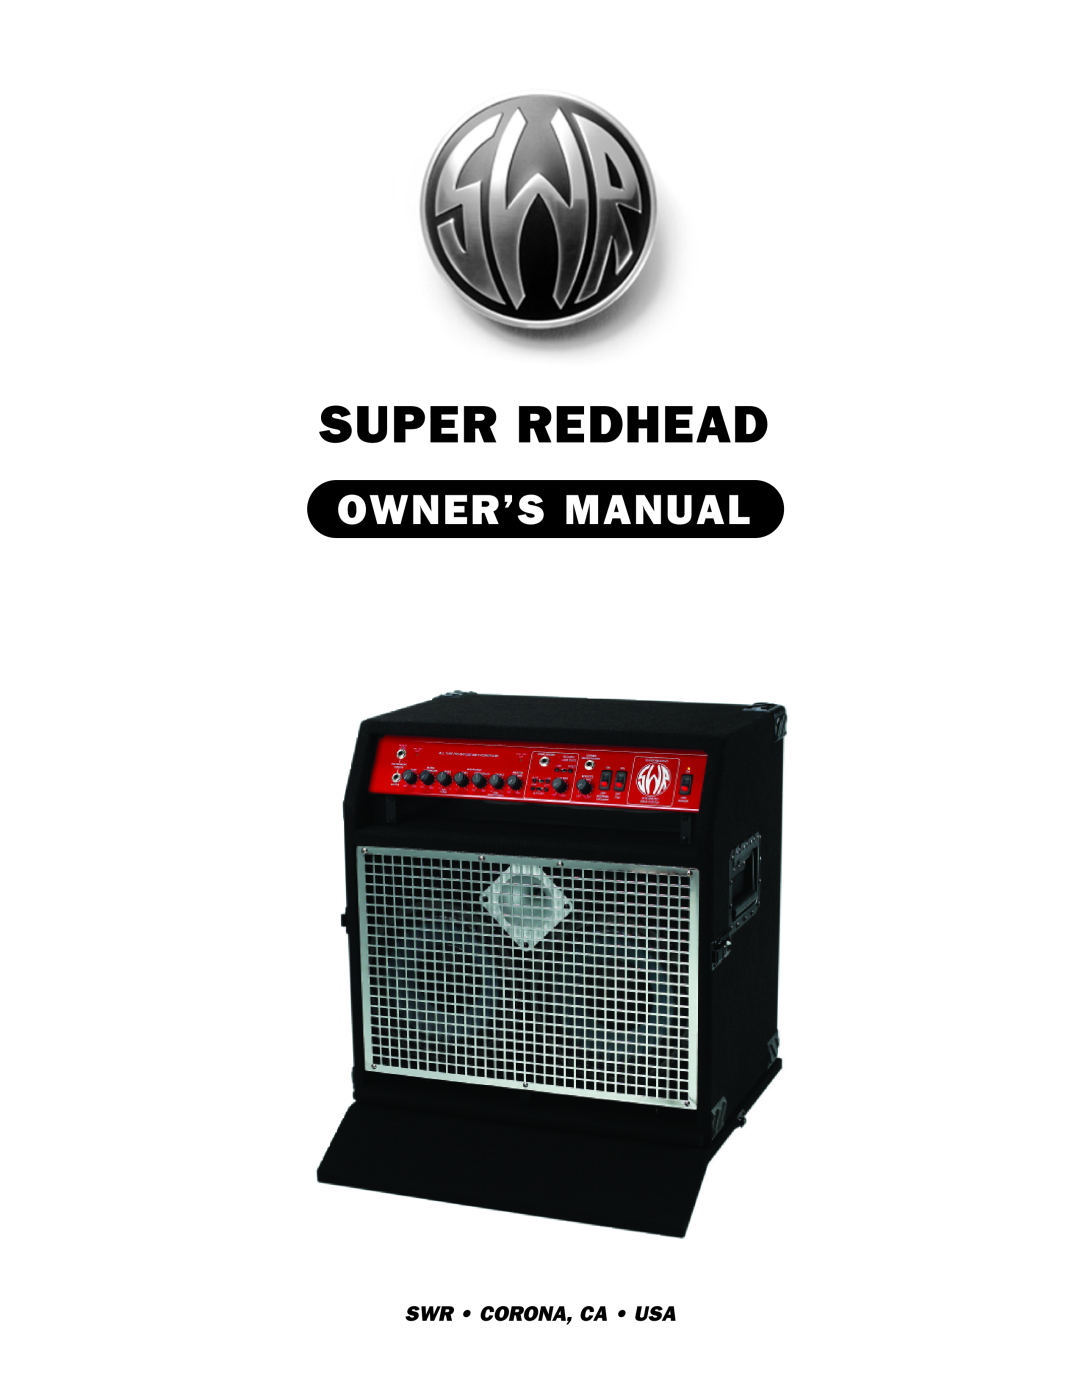 SWR Sound Super Redhead owner manual Swr Corona, Ca Usa 